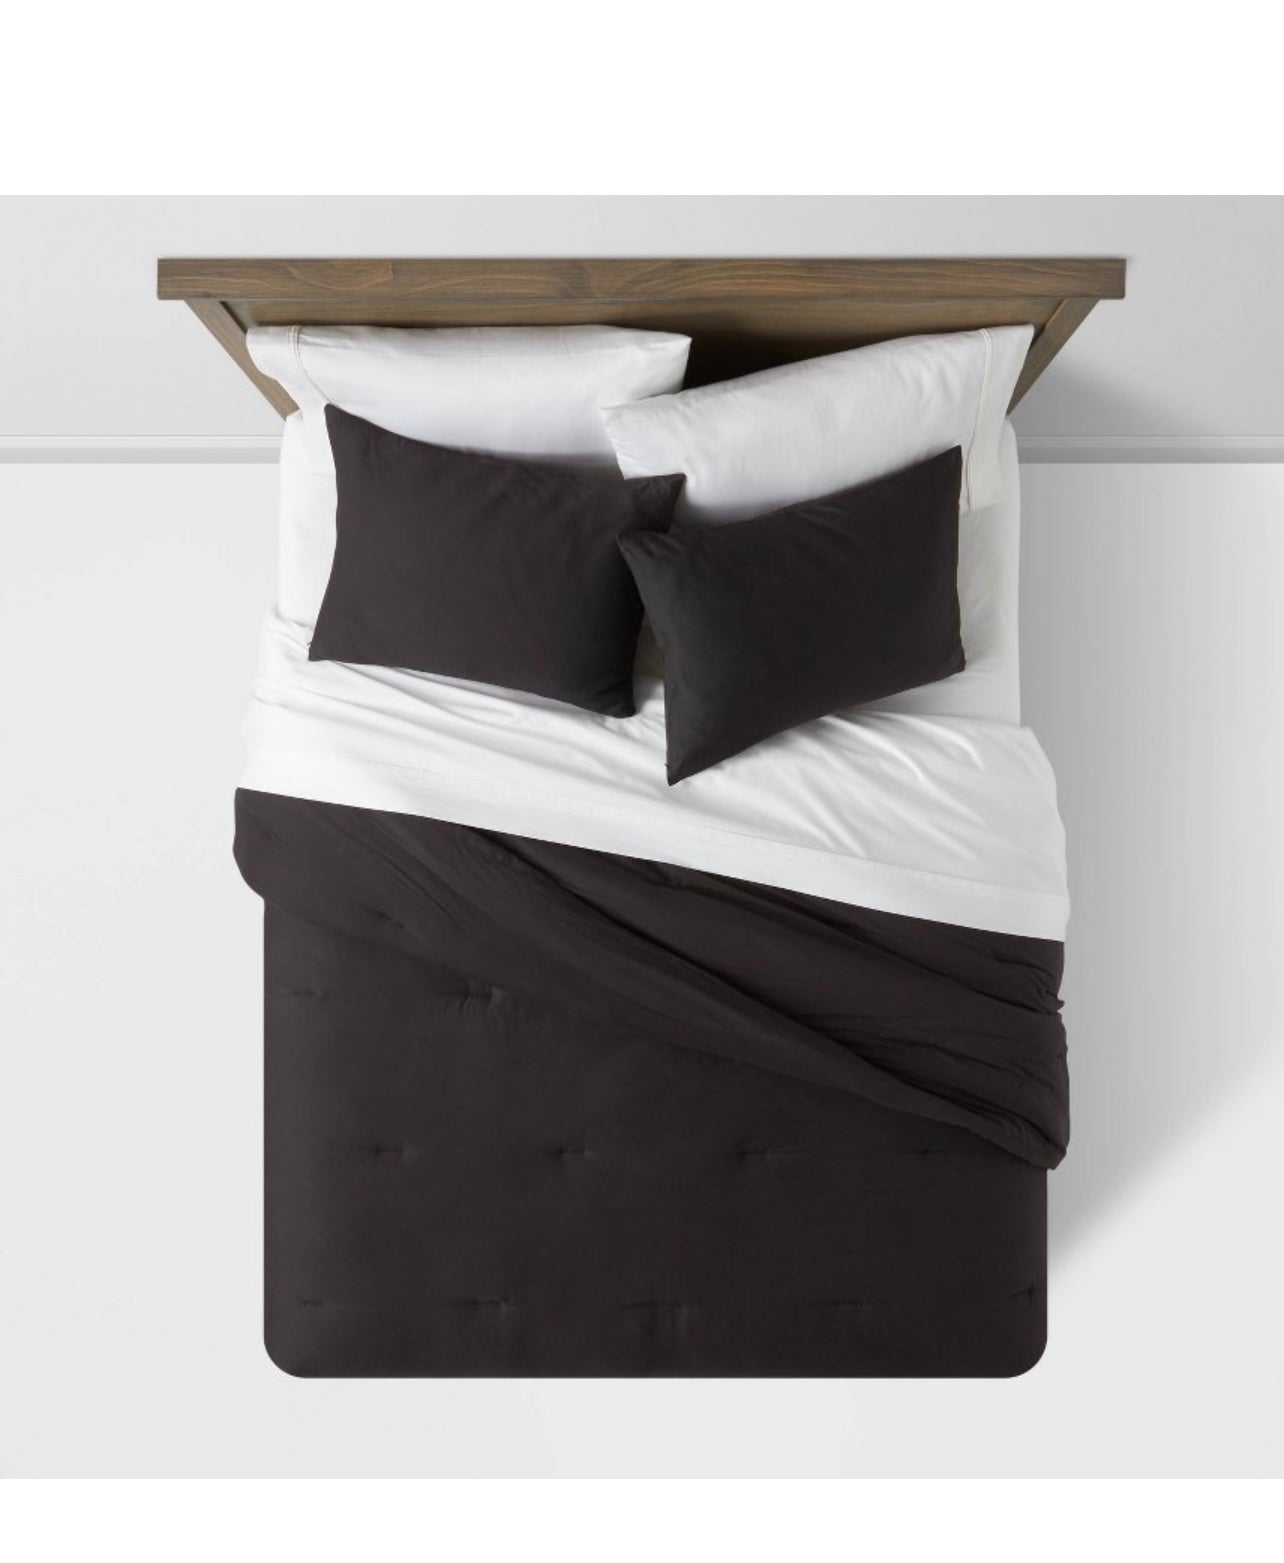 Full/Queen Washed Cotton Sateen Comforter & Sham Set Black - Threshold™